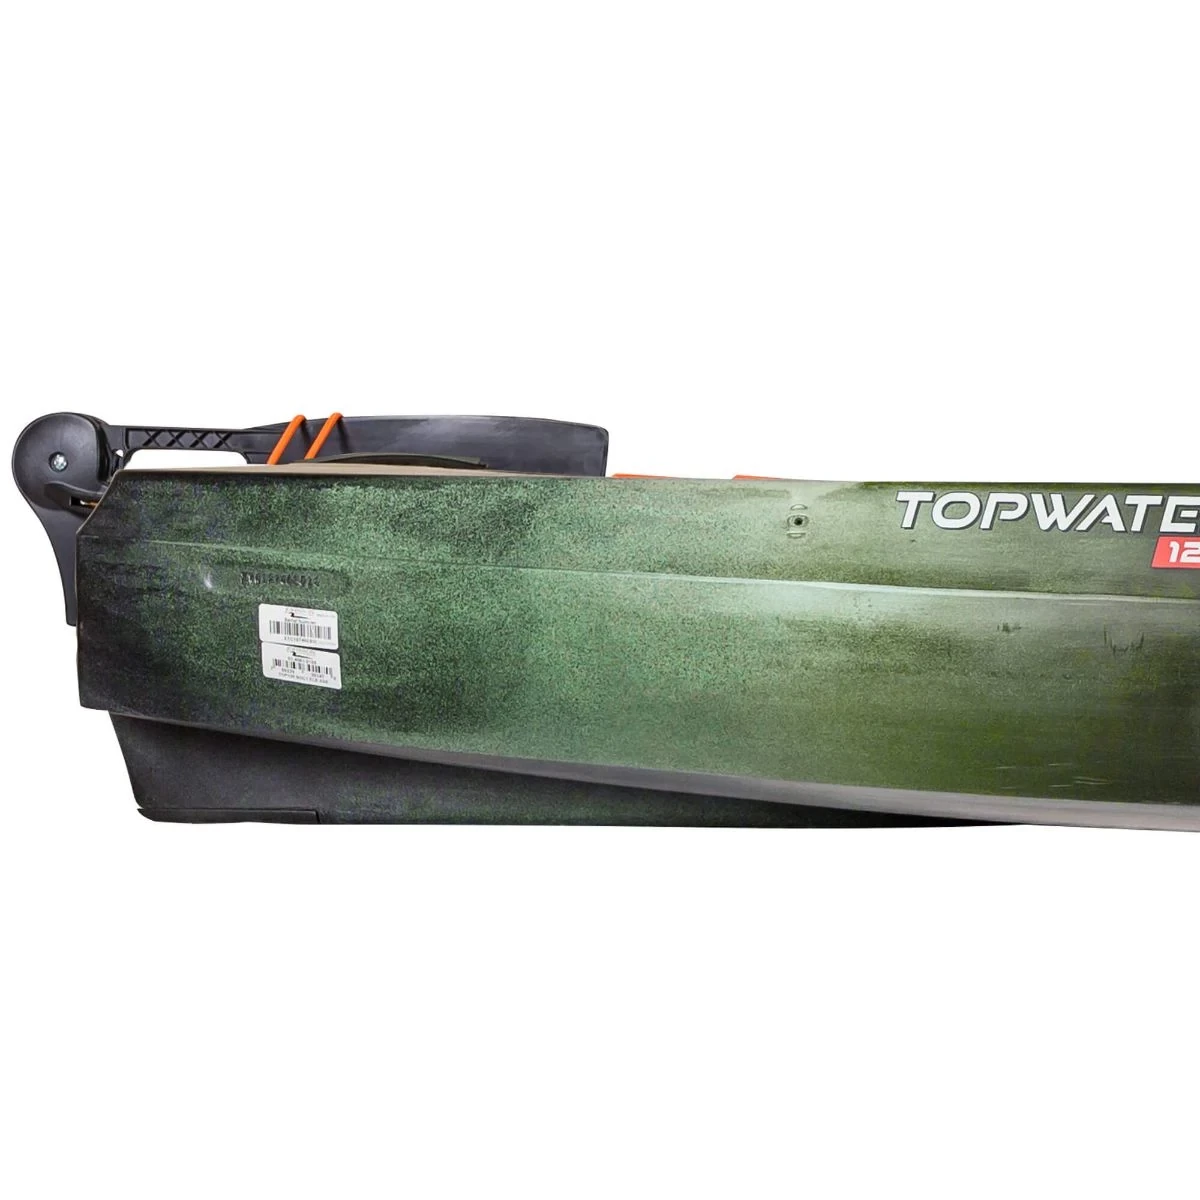 Topwater 120 Rudder Kit